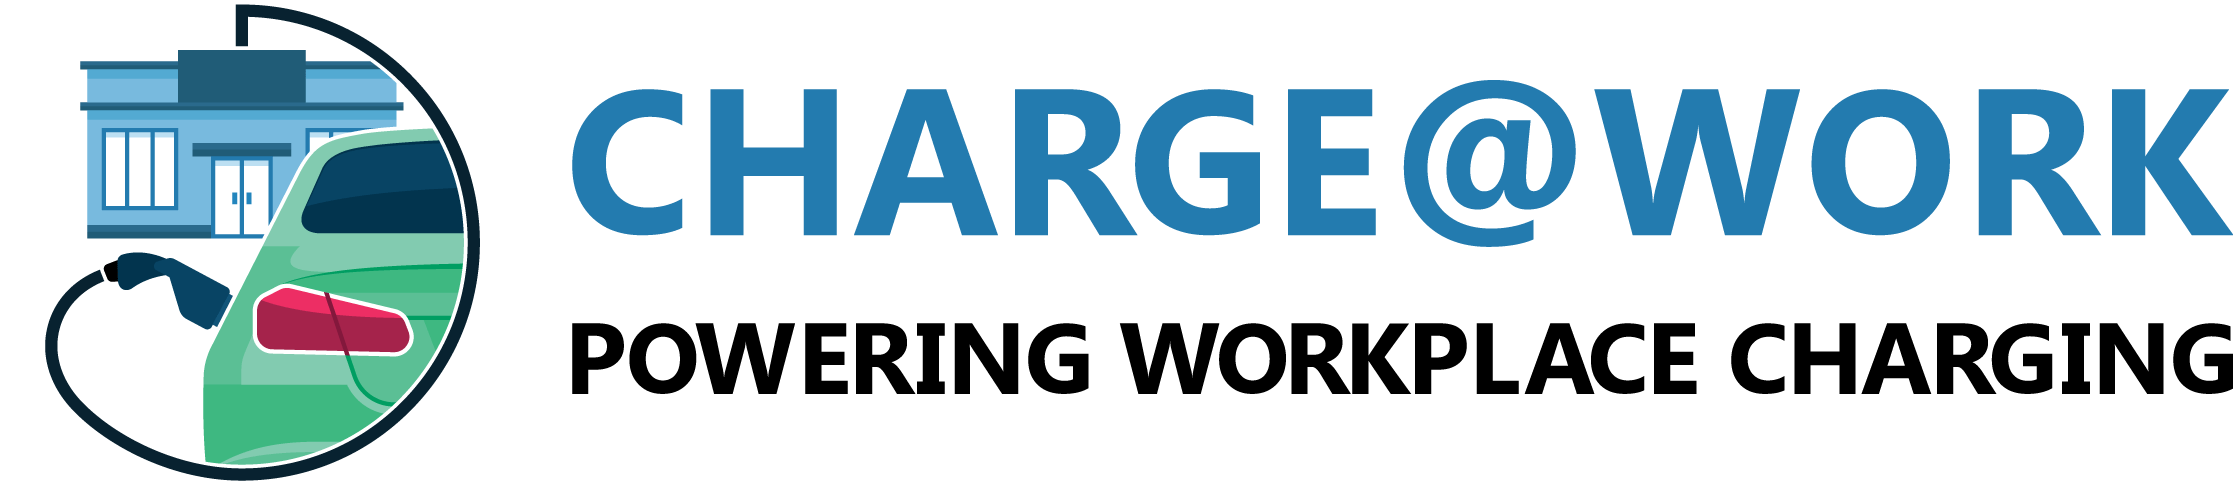 Charge@work logo